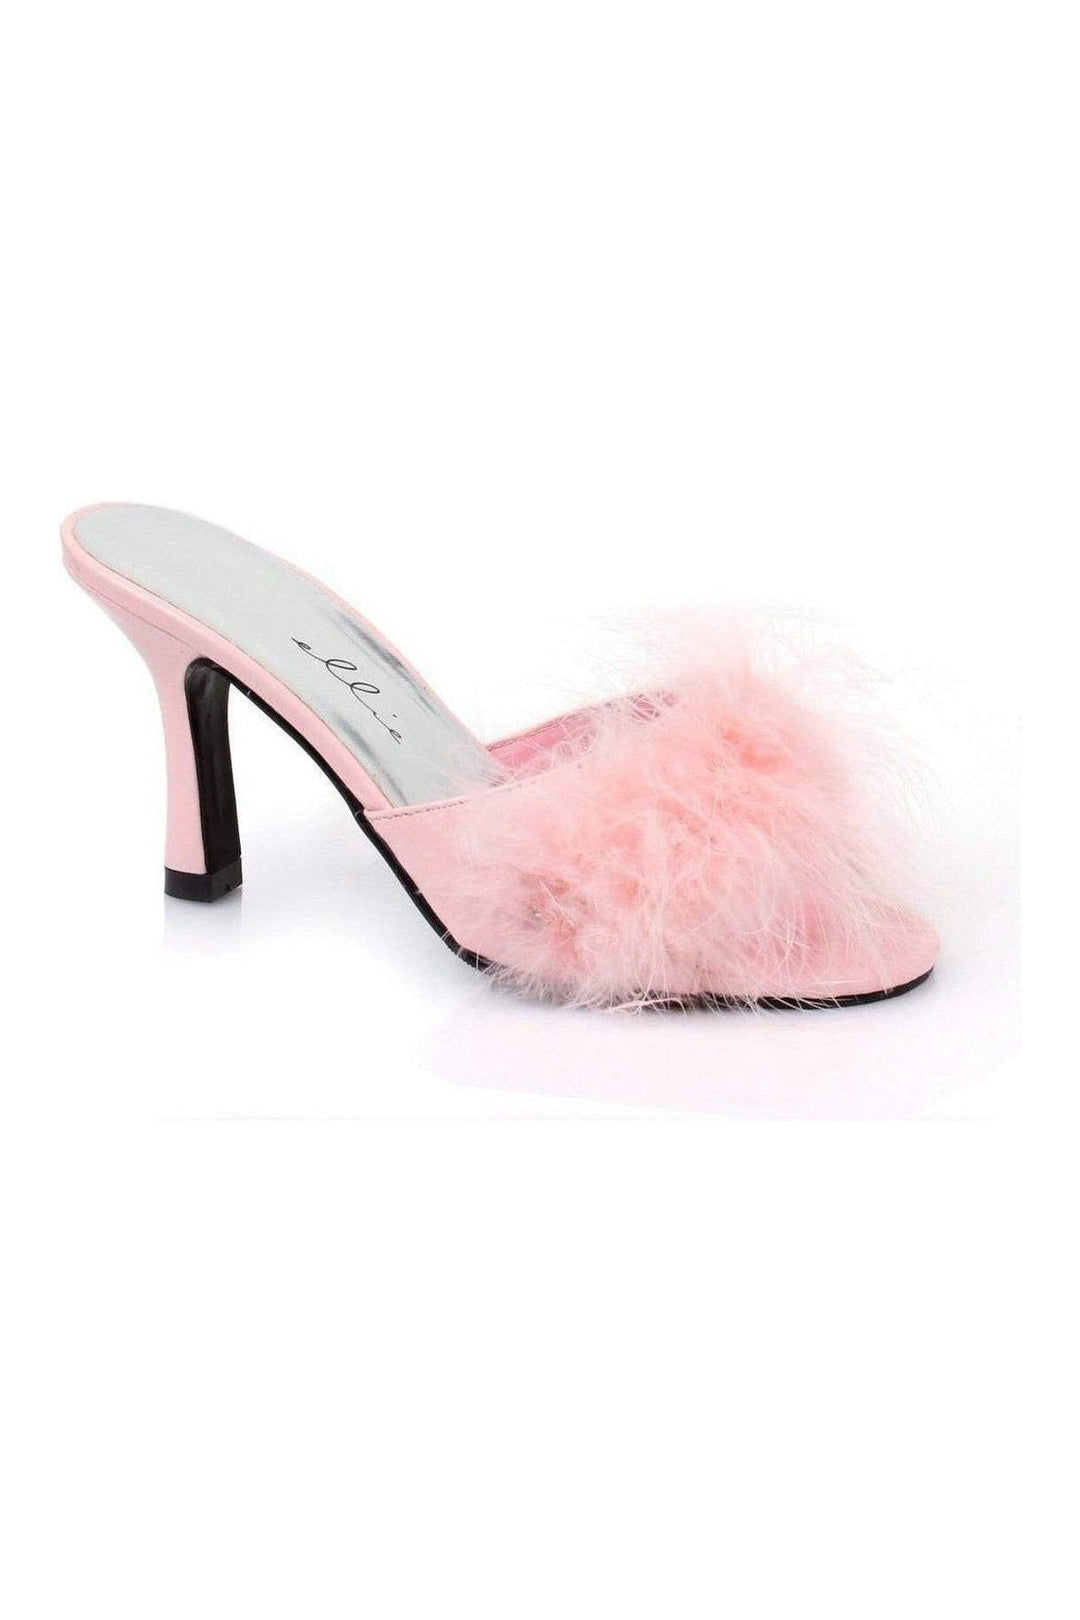 361-SASHA Marabou | Pink Faux Leather-Ellie Shoes-Pink-Marabous-SEXYSHOES.COM